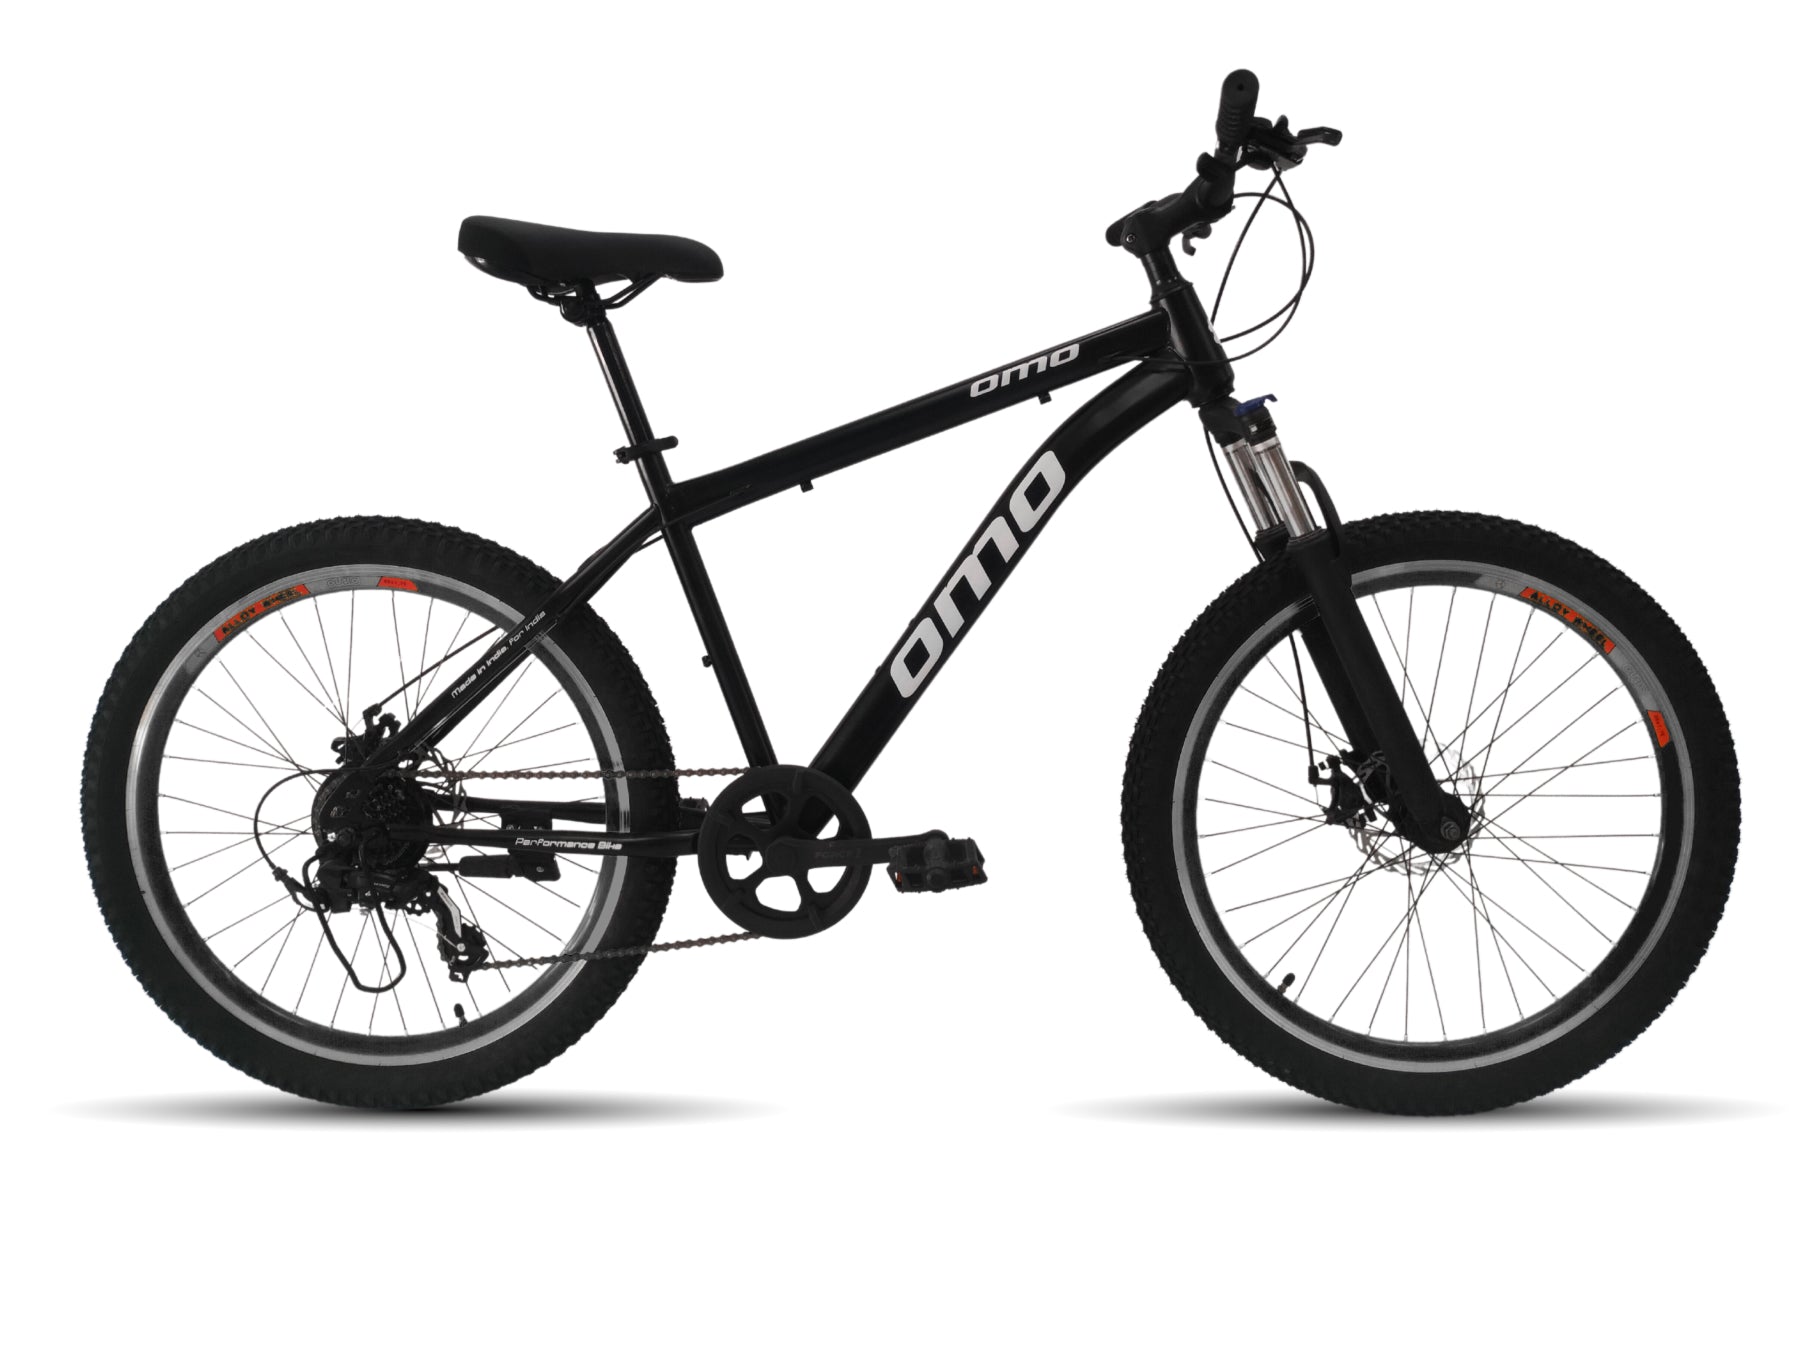 OMO bikes steel MTB bike manali shimano gear mountain bike with suspension disc brakes in black color black rim 